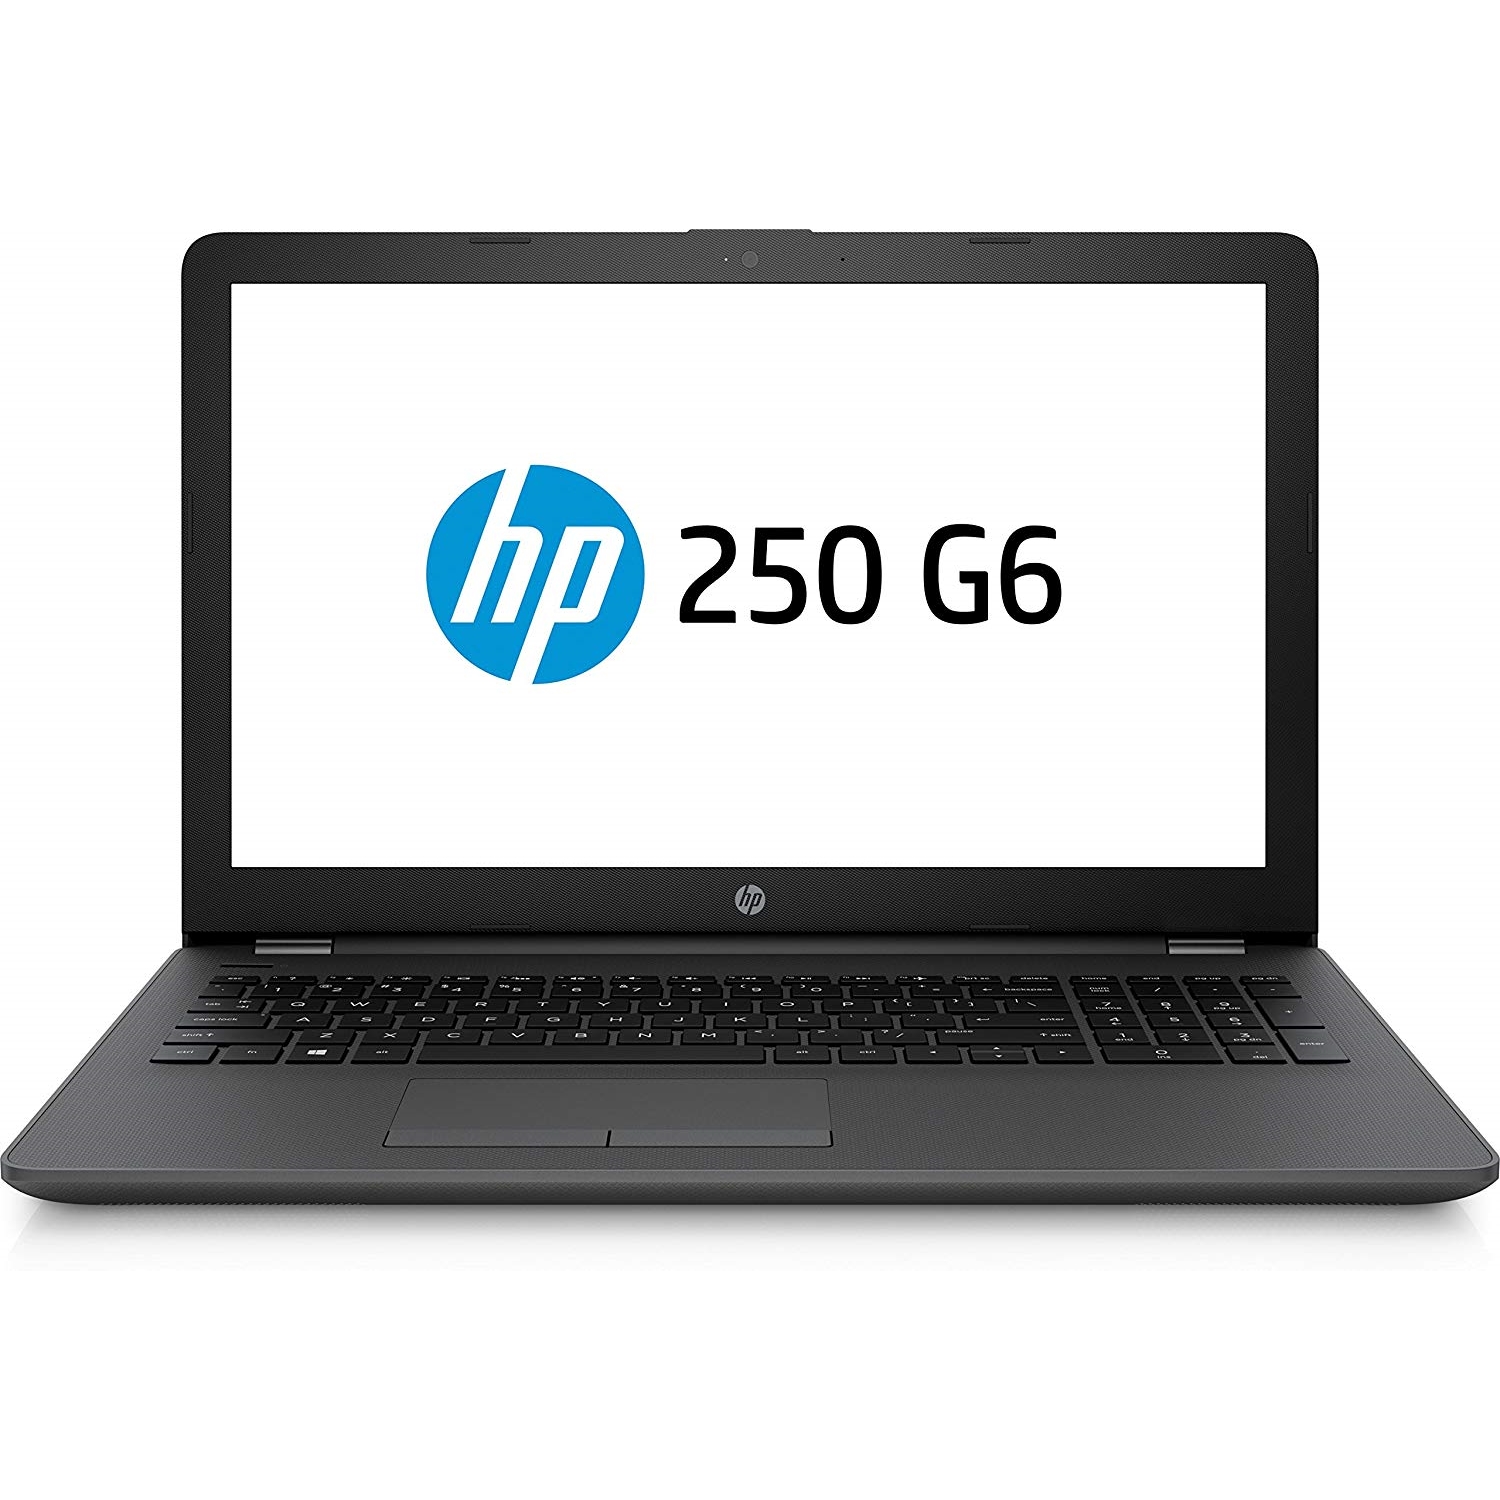 HP 250 G6 3QM27EA I3-7020 4GB 500GB 2GB R5-M520 15.6" FREEDOS NOTEBOOK